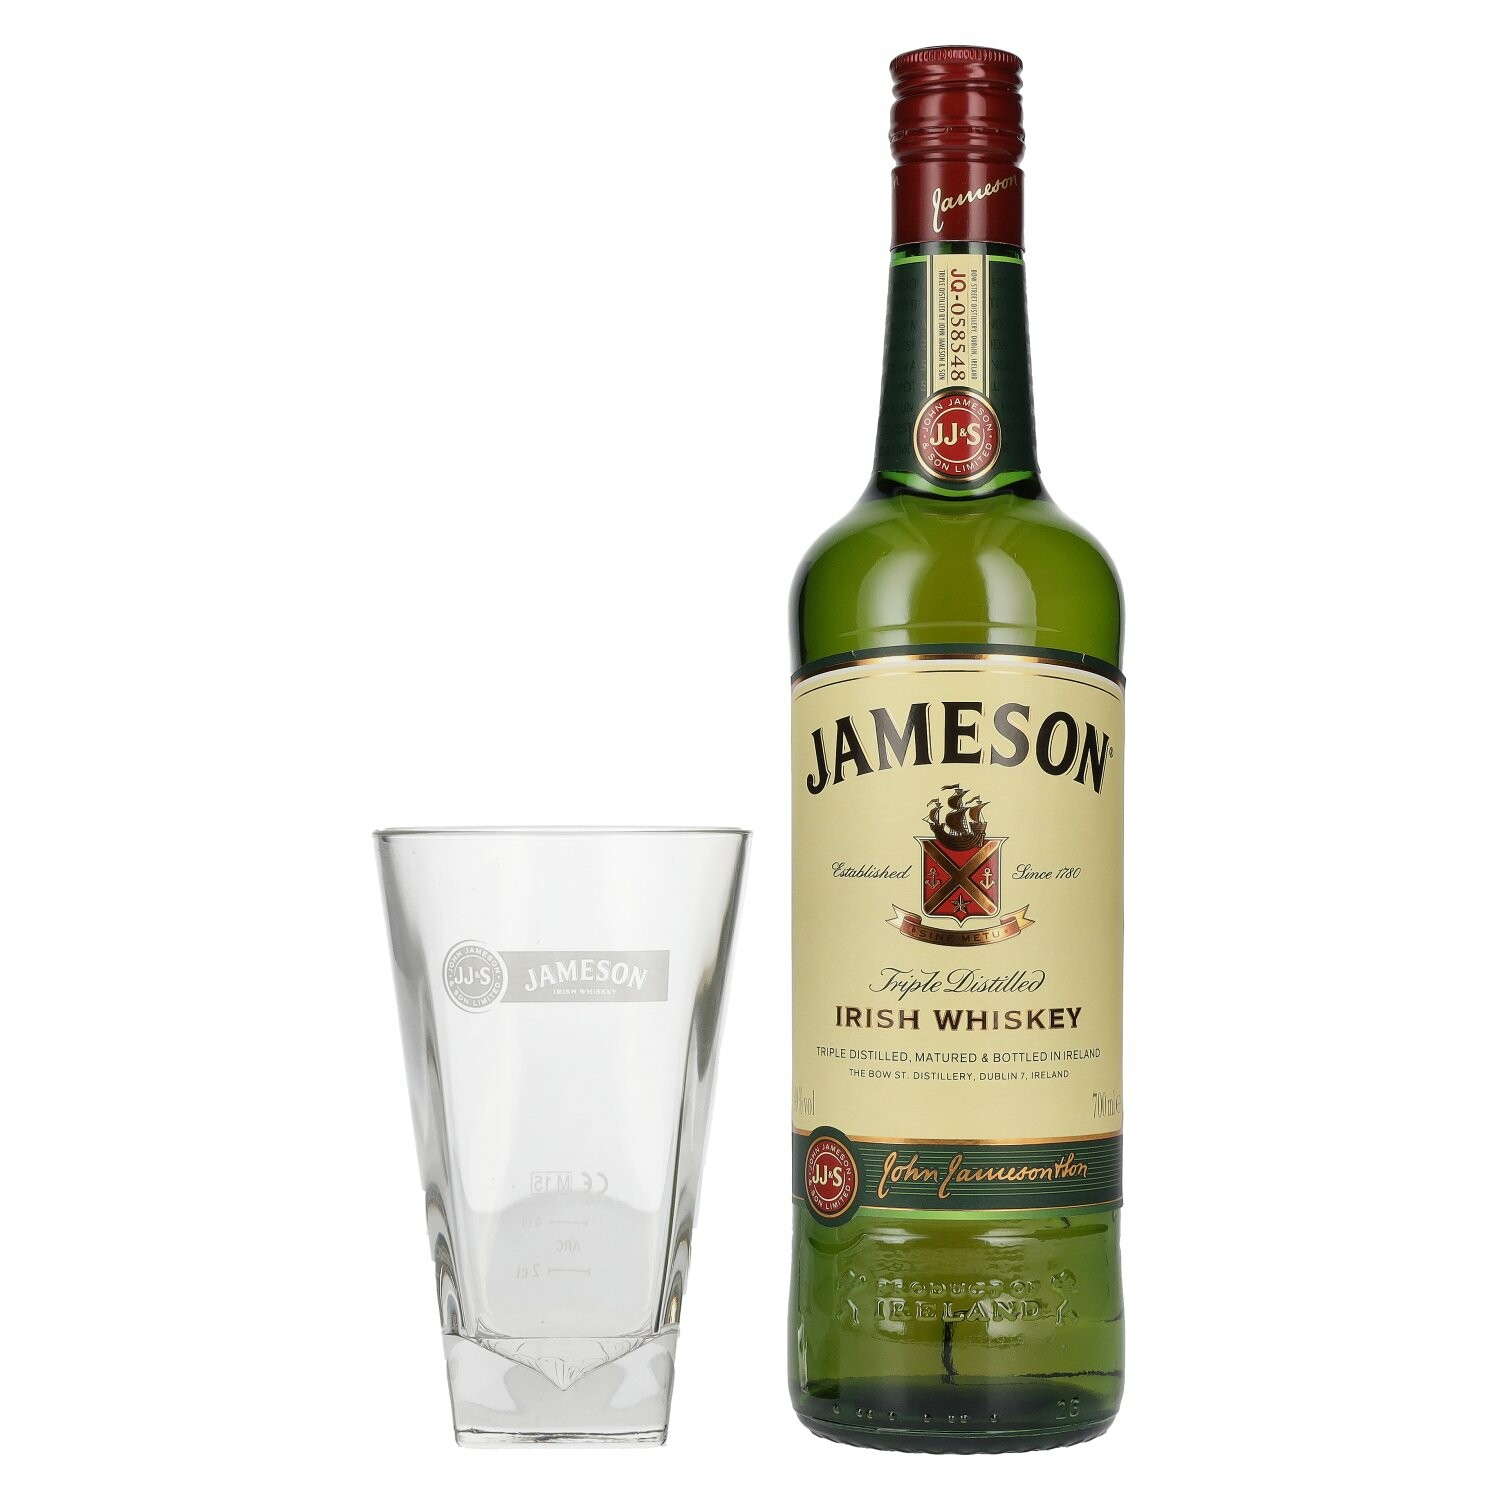 Jameson Triple Distilled Irish Whiskey Onpack 40% Vol. 0,7l with glass